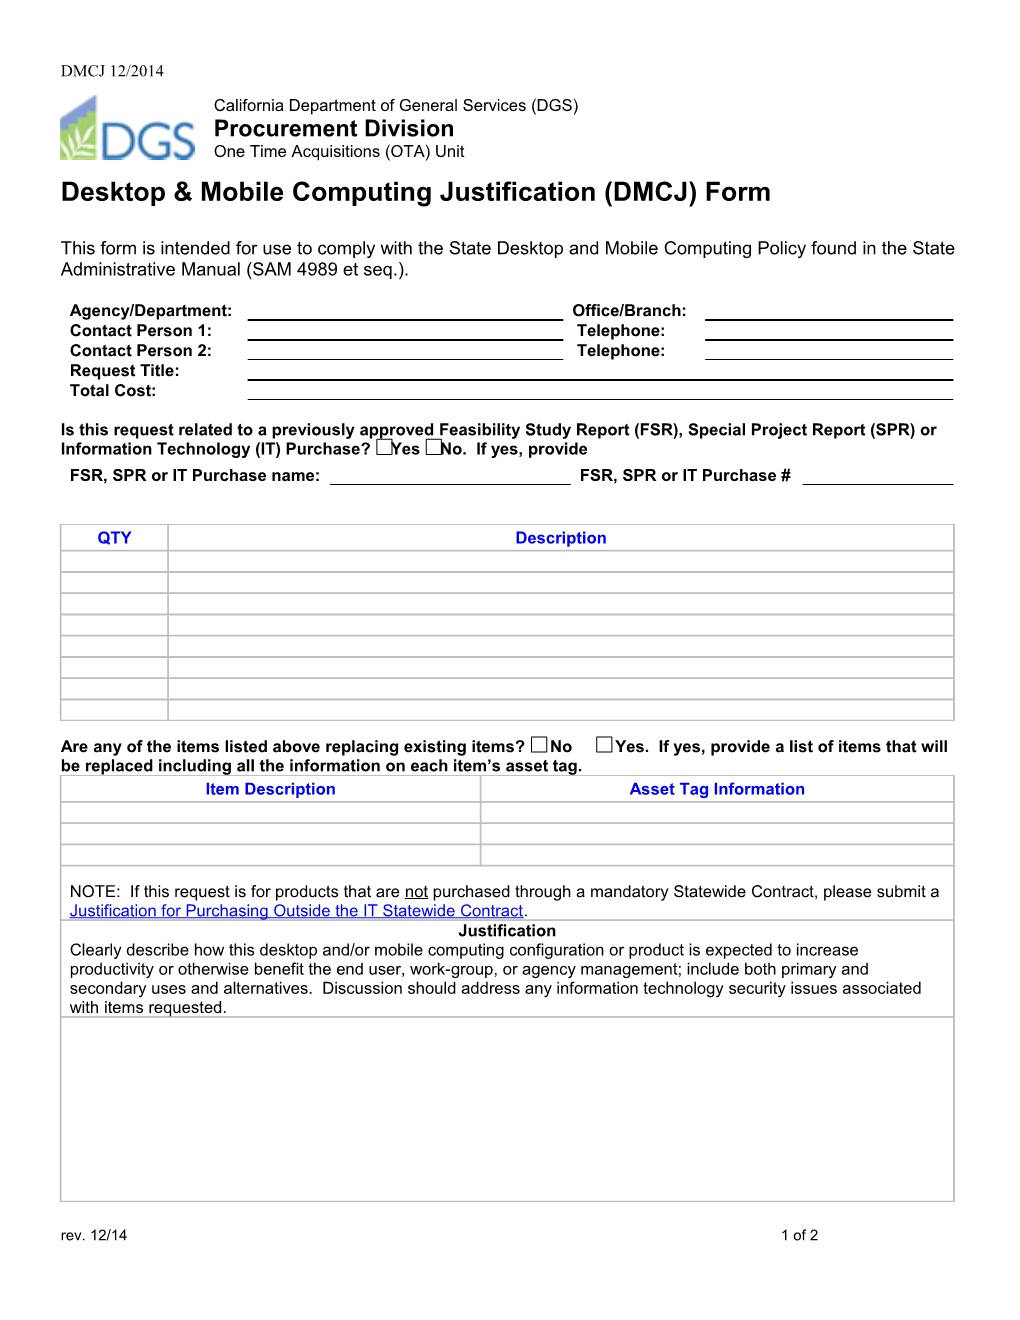 Desktop and Mobile Computing Justification Form